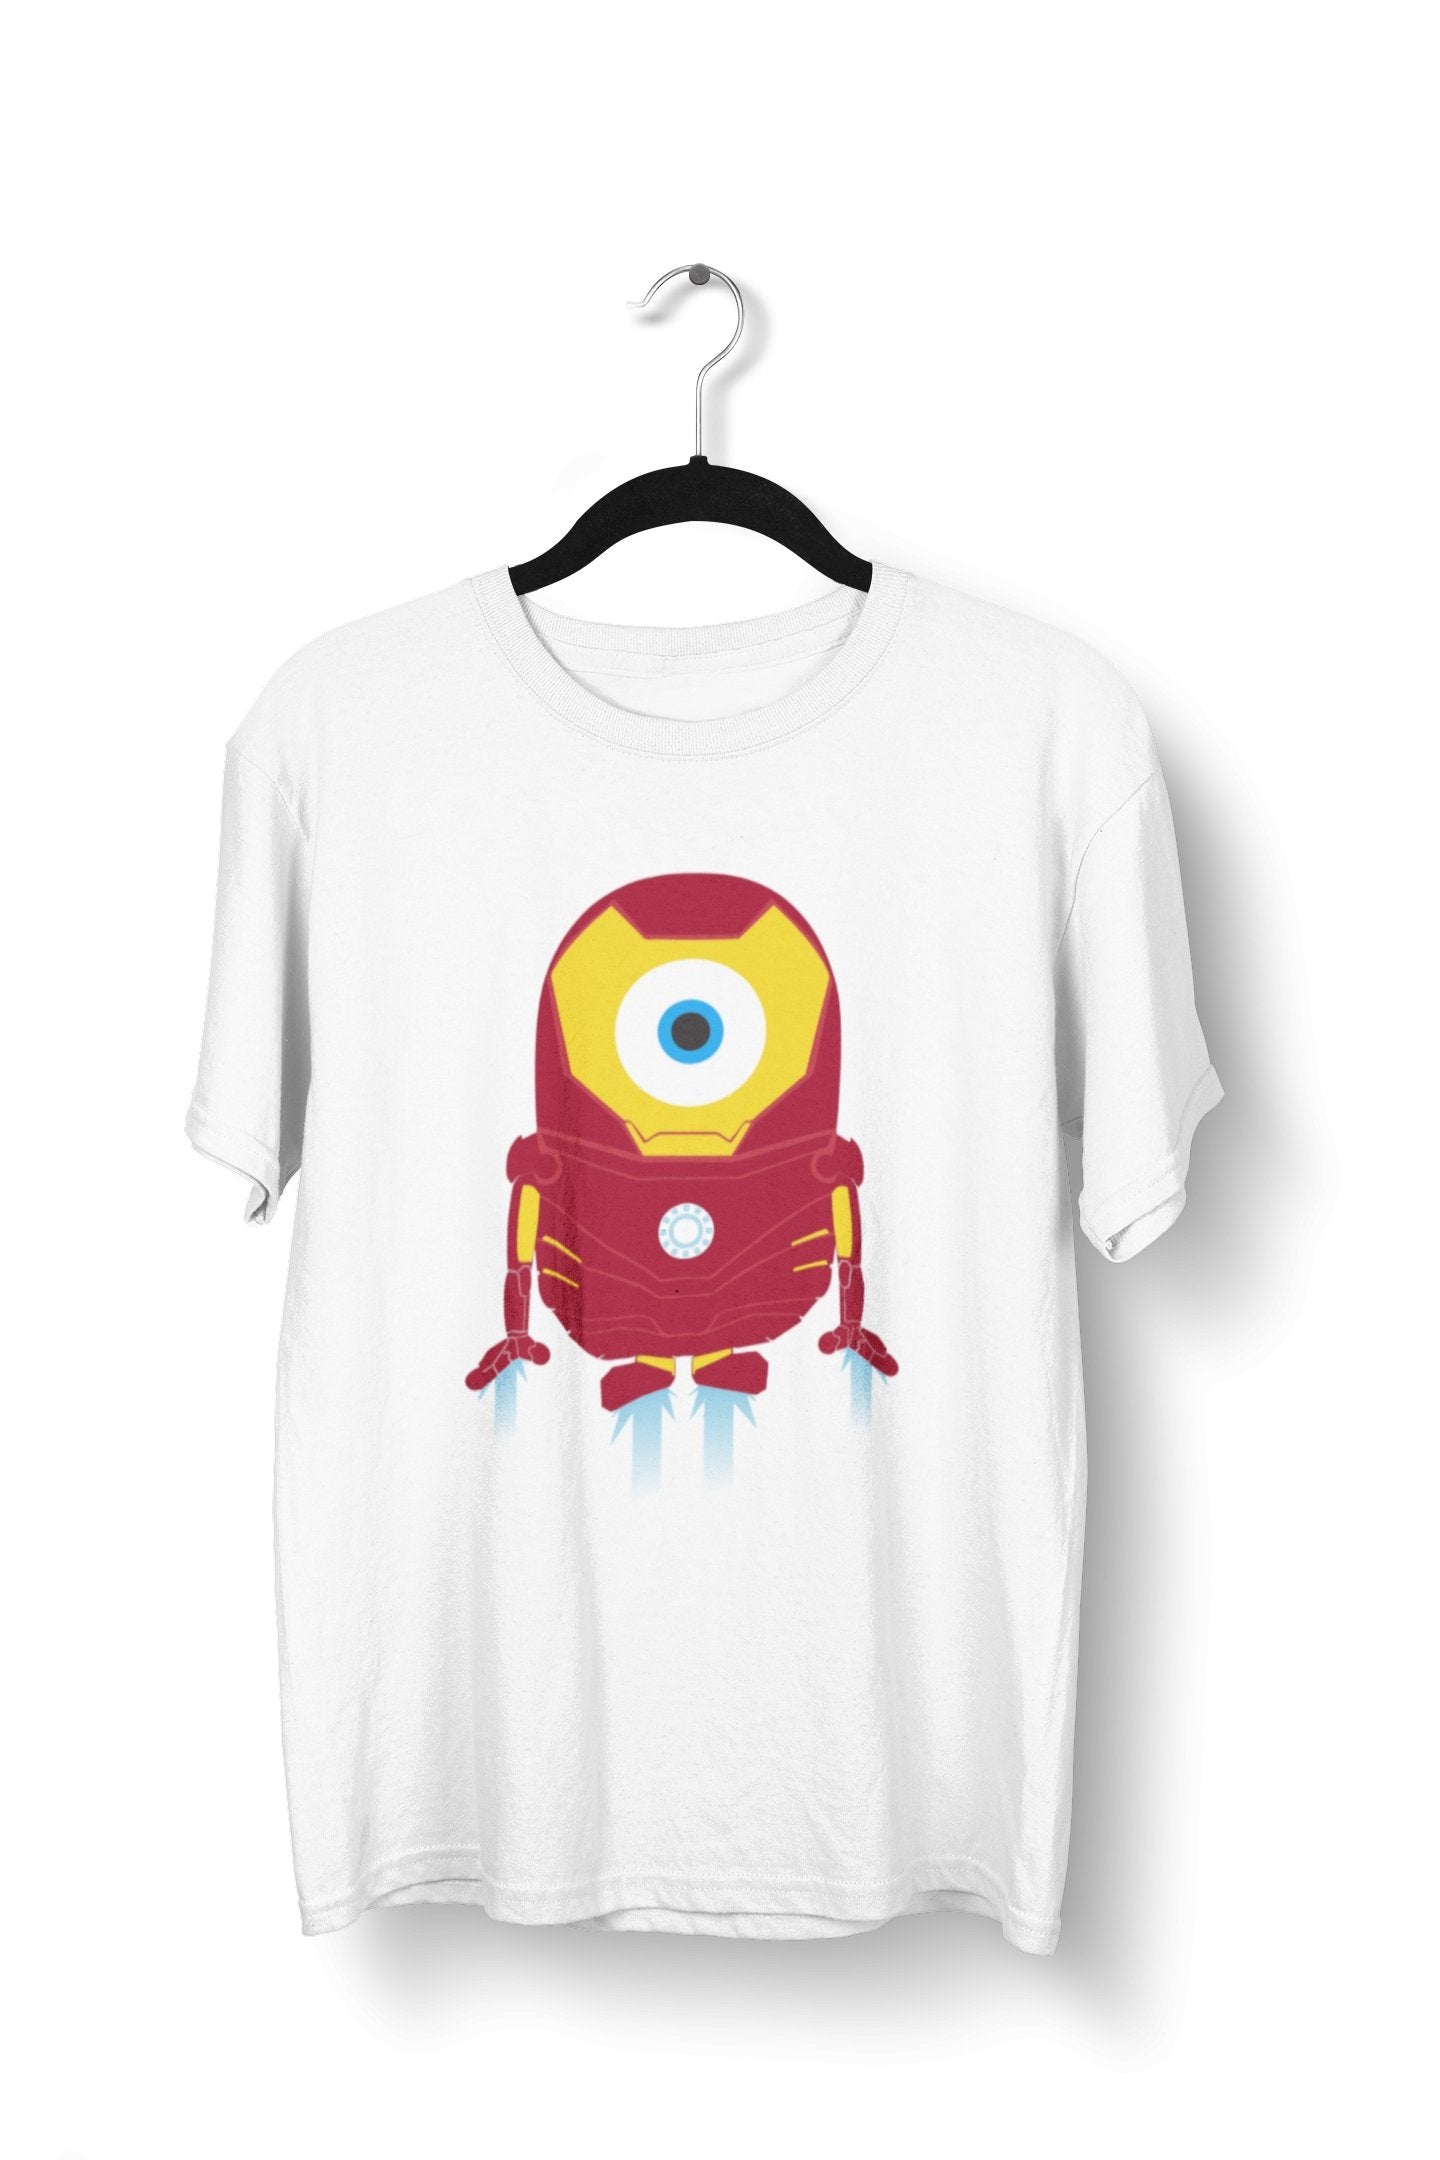 thelegalgang,Iron Man Minion Graphic T-Shirt for Men,.